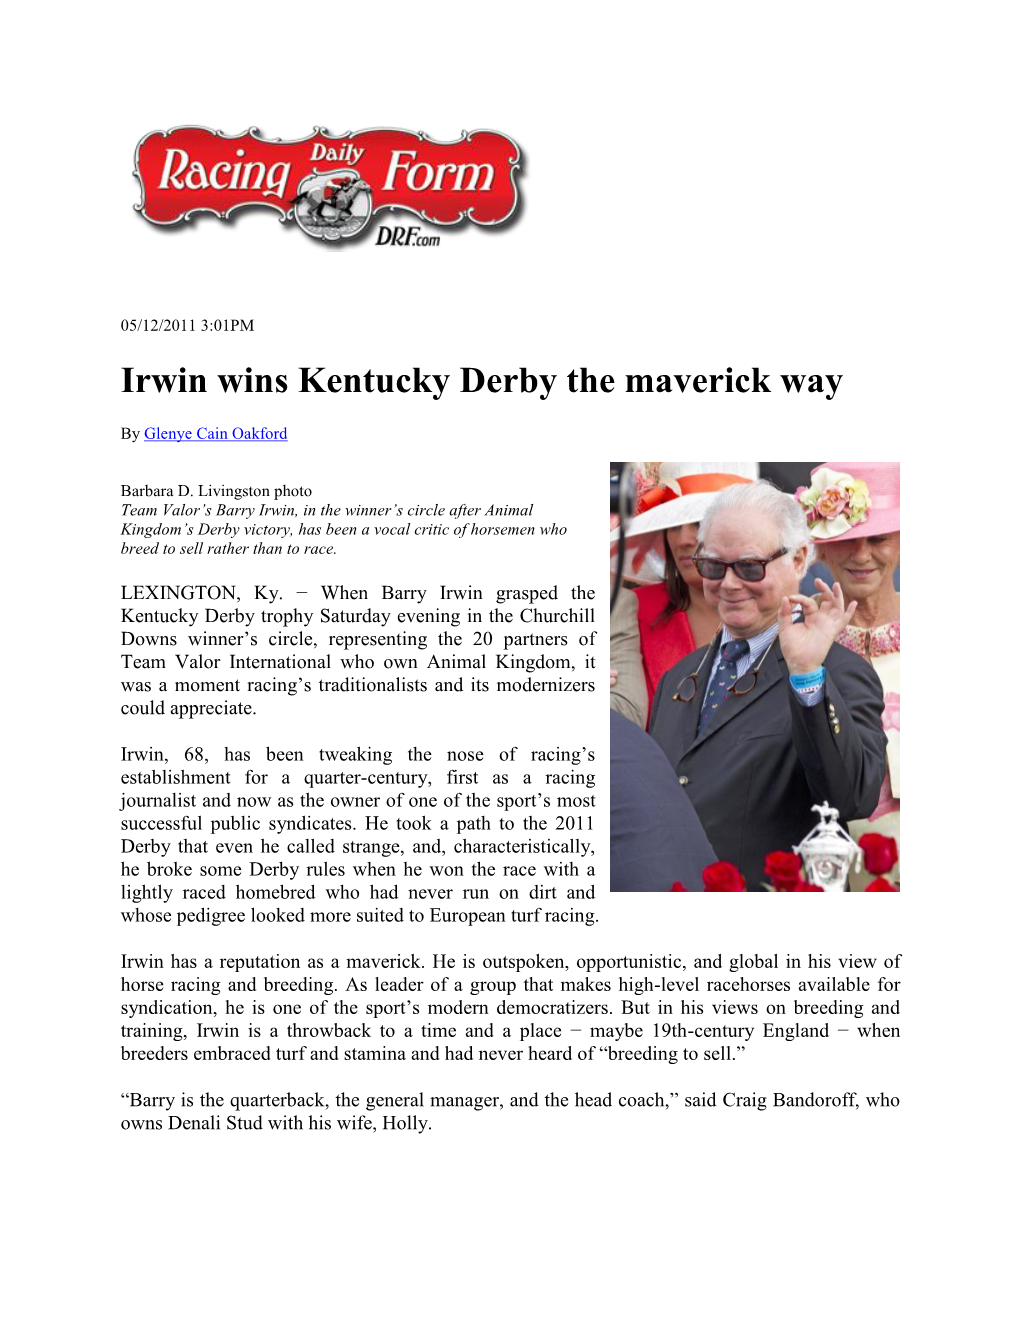 Irwin Wins Kentucky Derby the Maverick Way